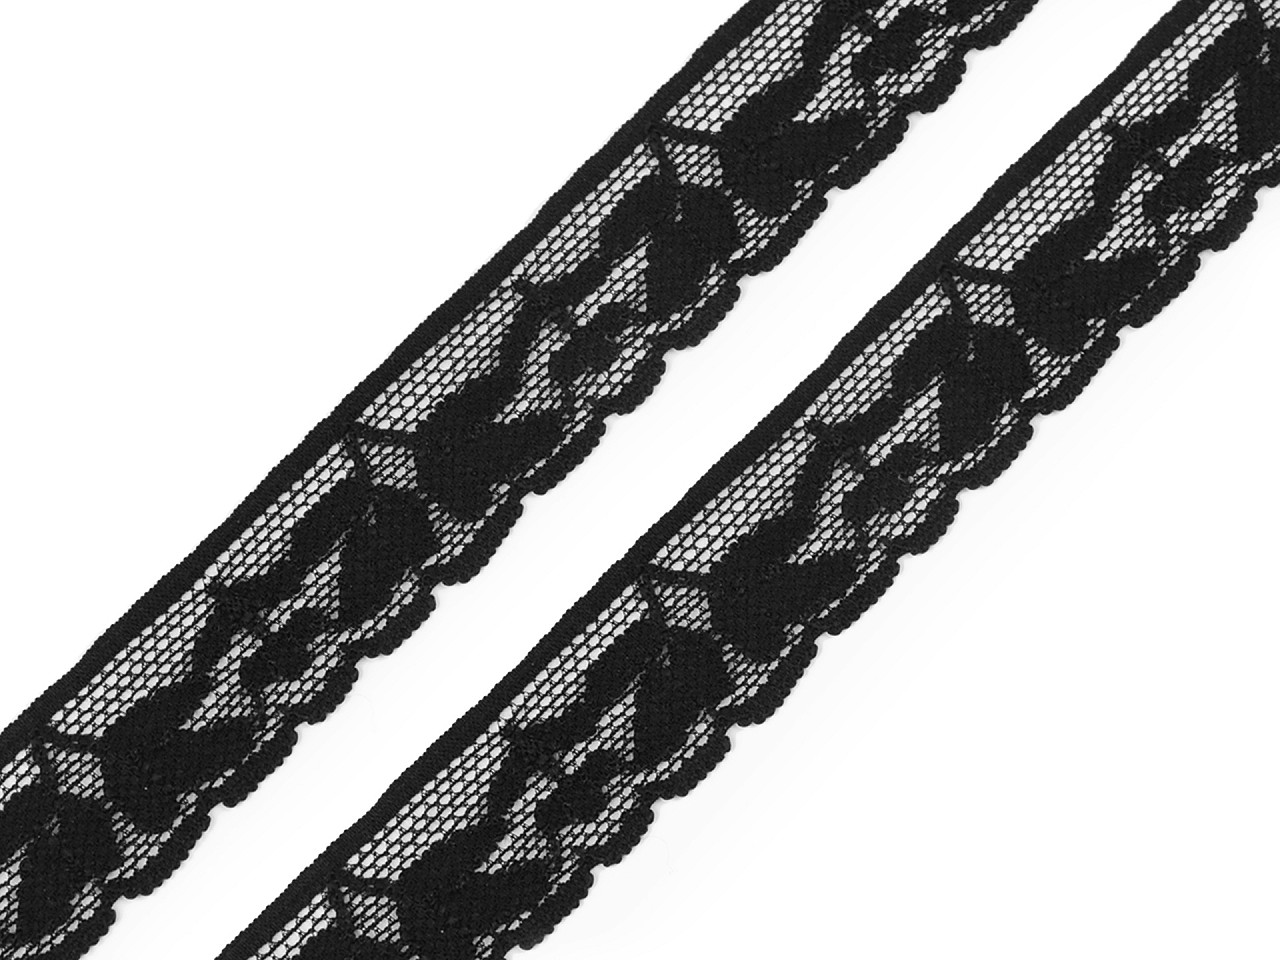 Textillux.sk - produkt Elastická čipka šírka 25 mm - 2 čierna